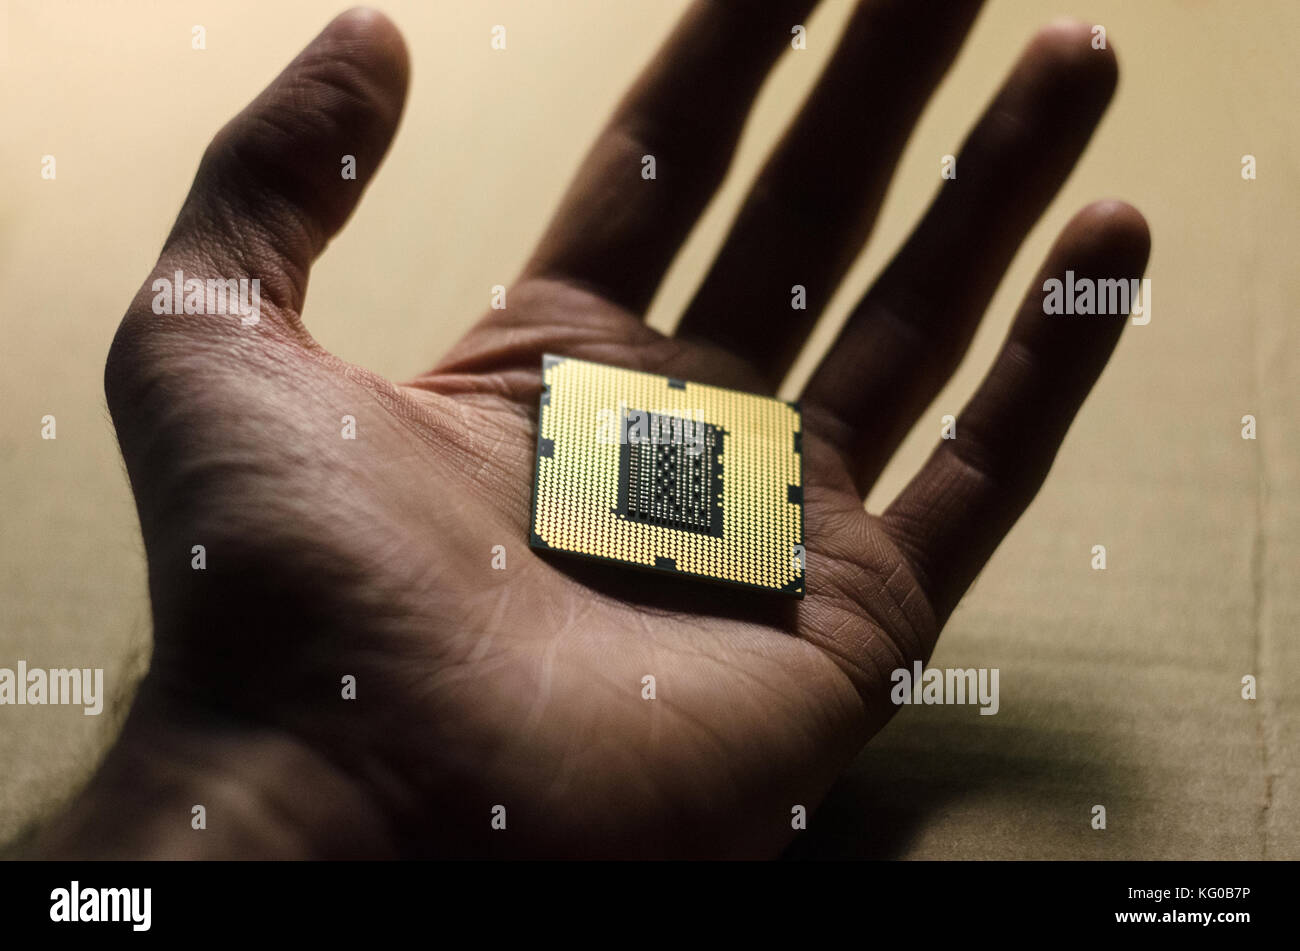 Gold i7 processor in hand Stock Photo